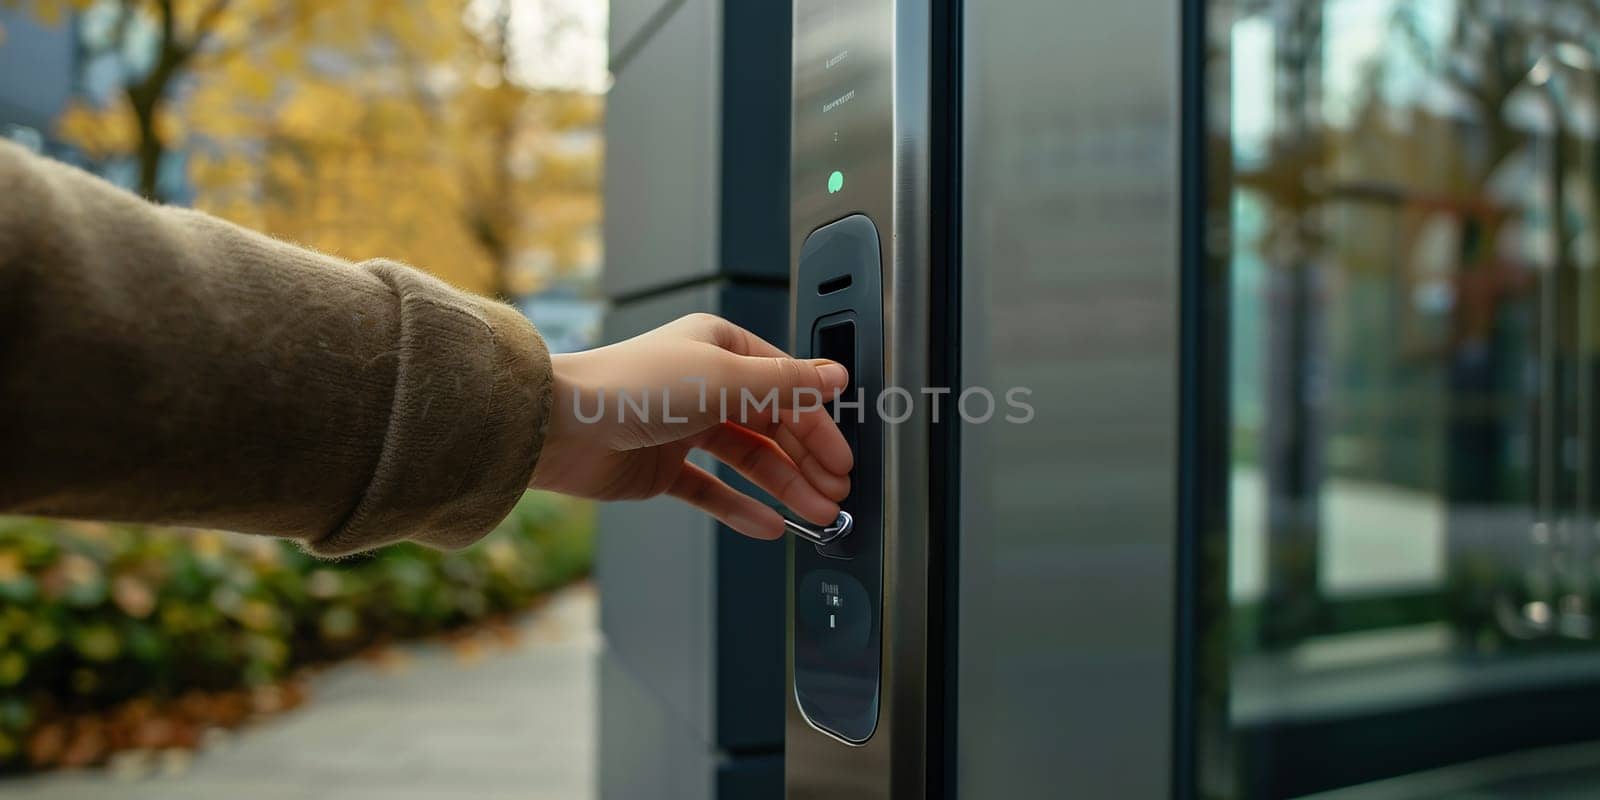 inputing passwords on an electronic door lock by Andelov13